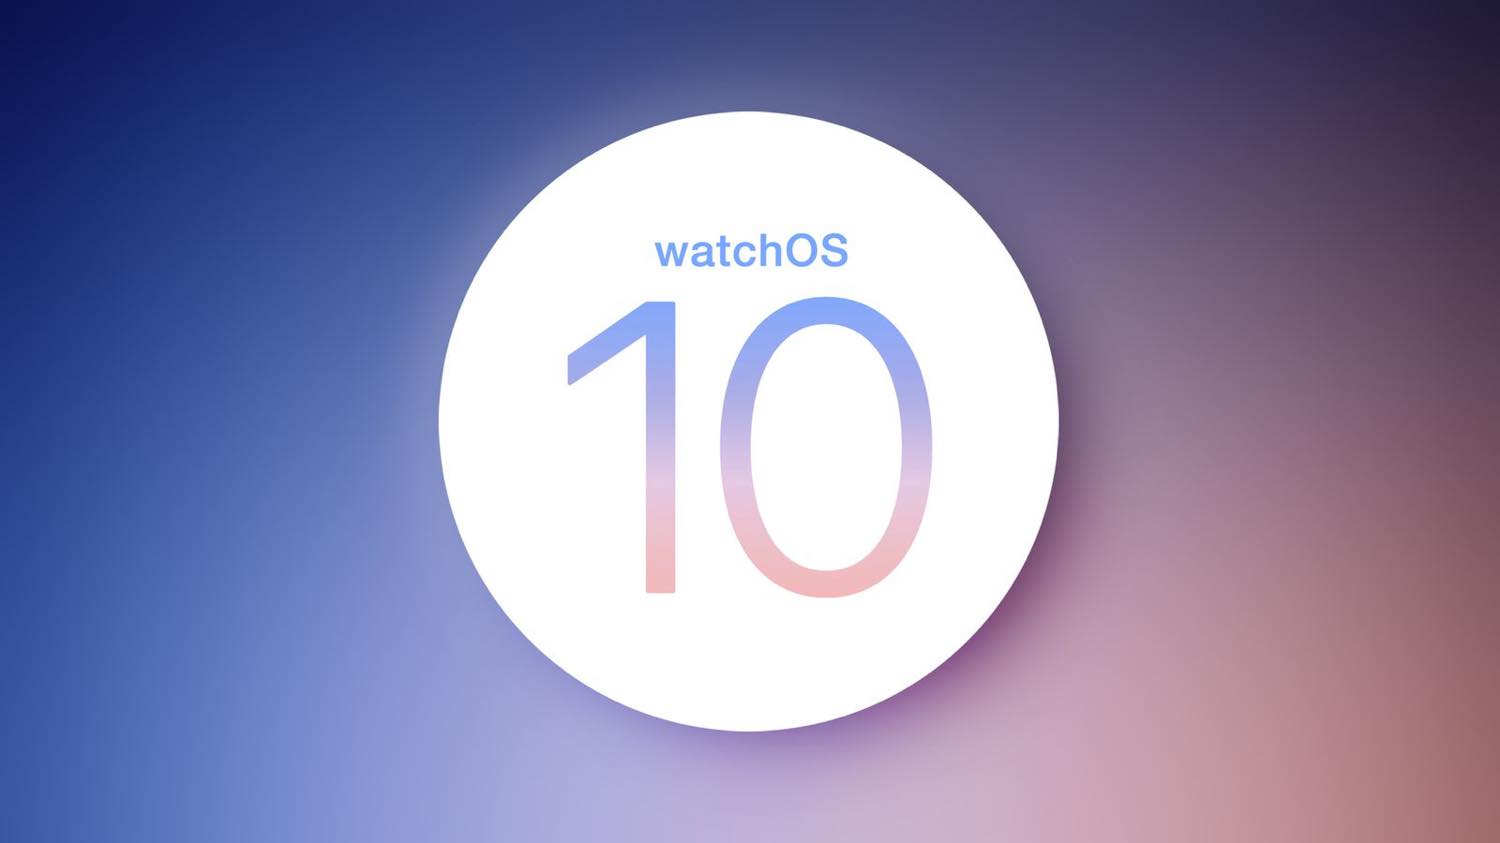 ｢watchOS 10｣は過去最大級のアップデートに − ウィジェットが中心的機能に??